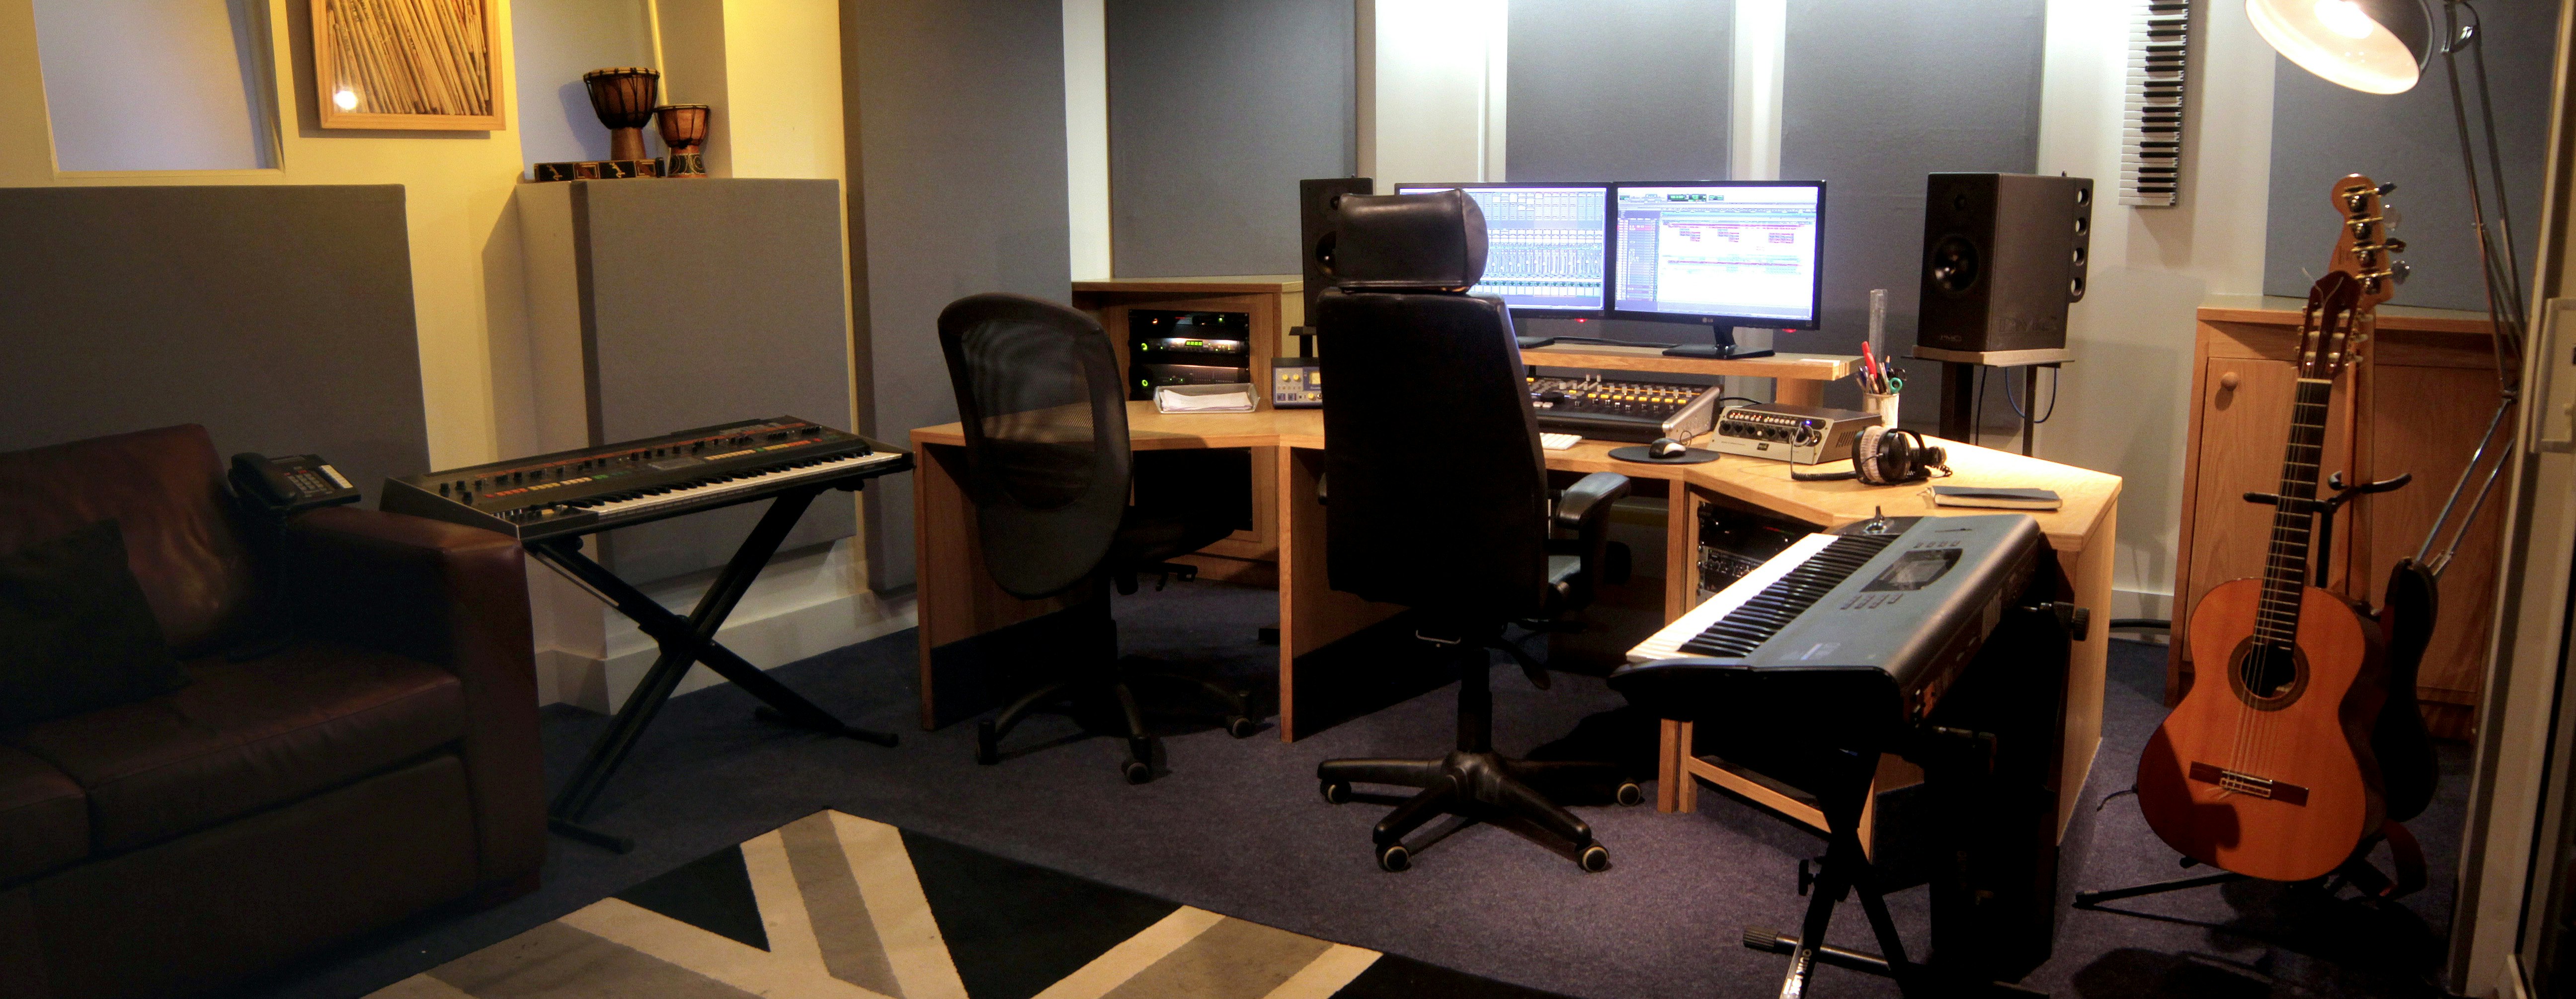 Music Practice Rooms Venues in London - Price Studios Ltd